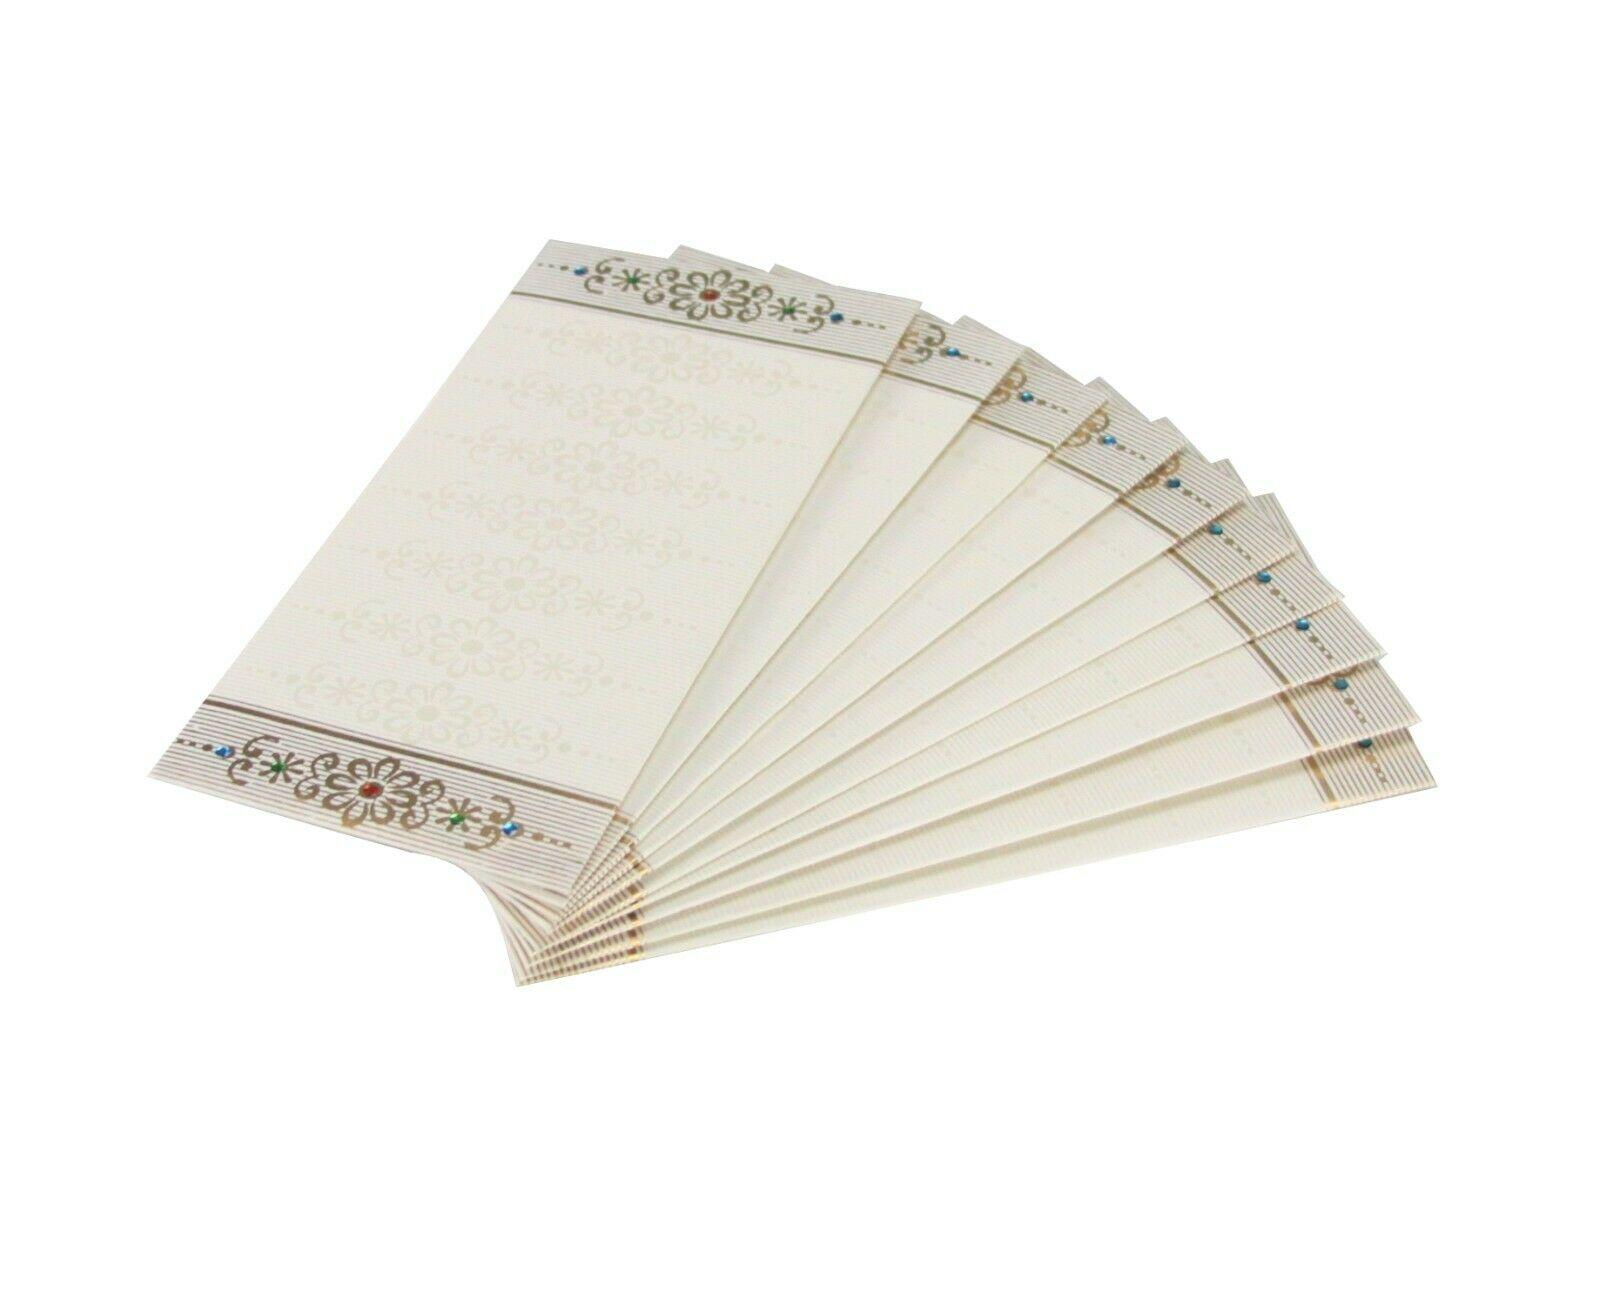 10x Indian Shagun Gift Envelopes Ivory White Gold Floral Money Gift Cash Wallets 